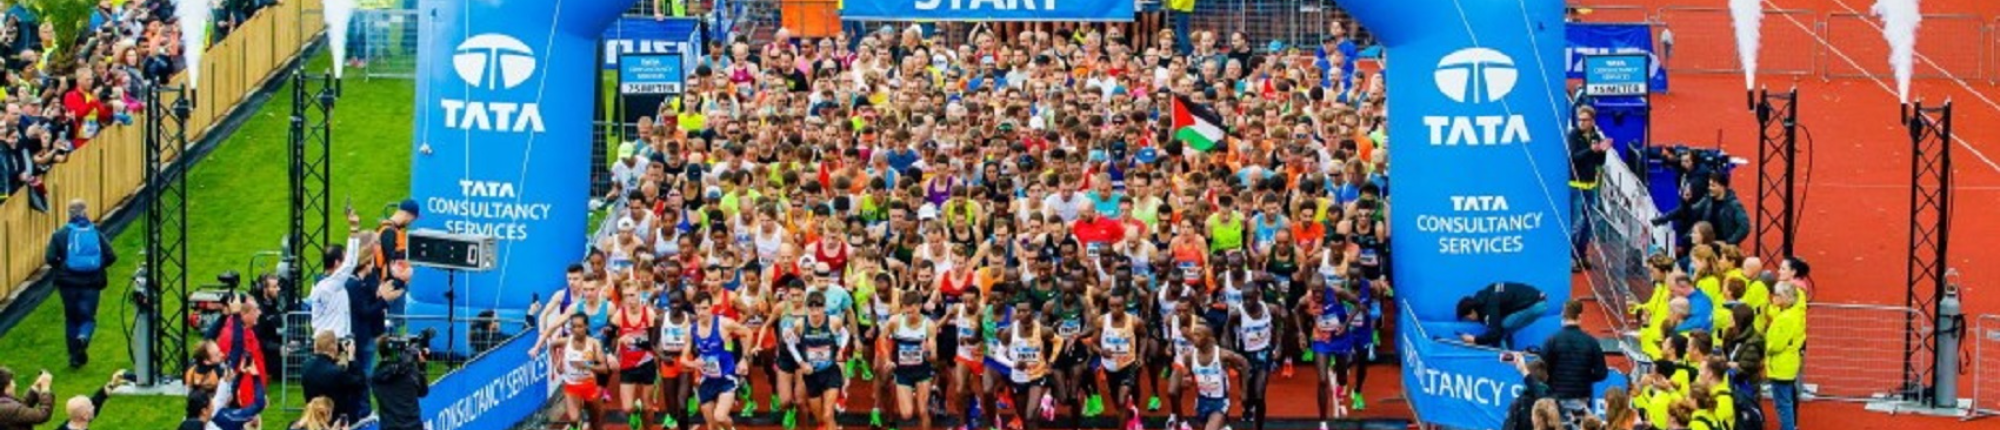 TCS Amsterdam Marathon (geef je vóór 4 augustus op)